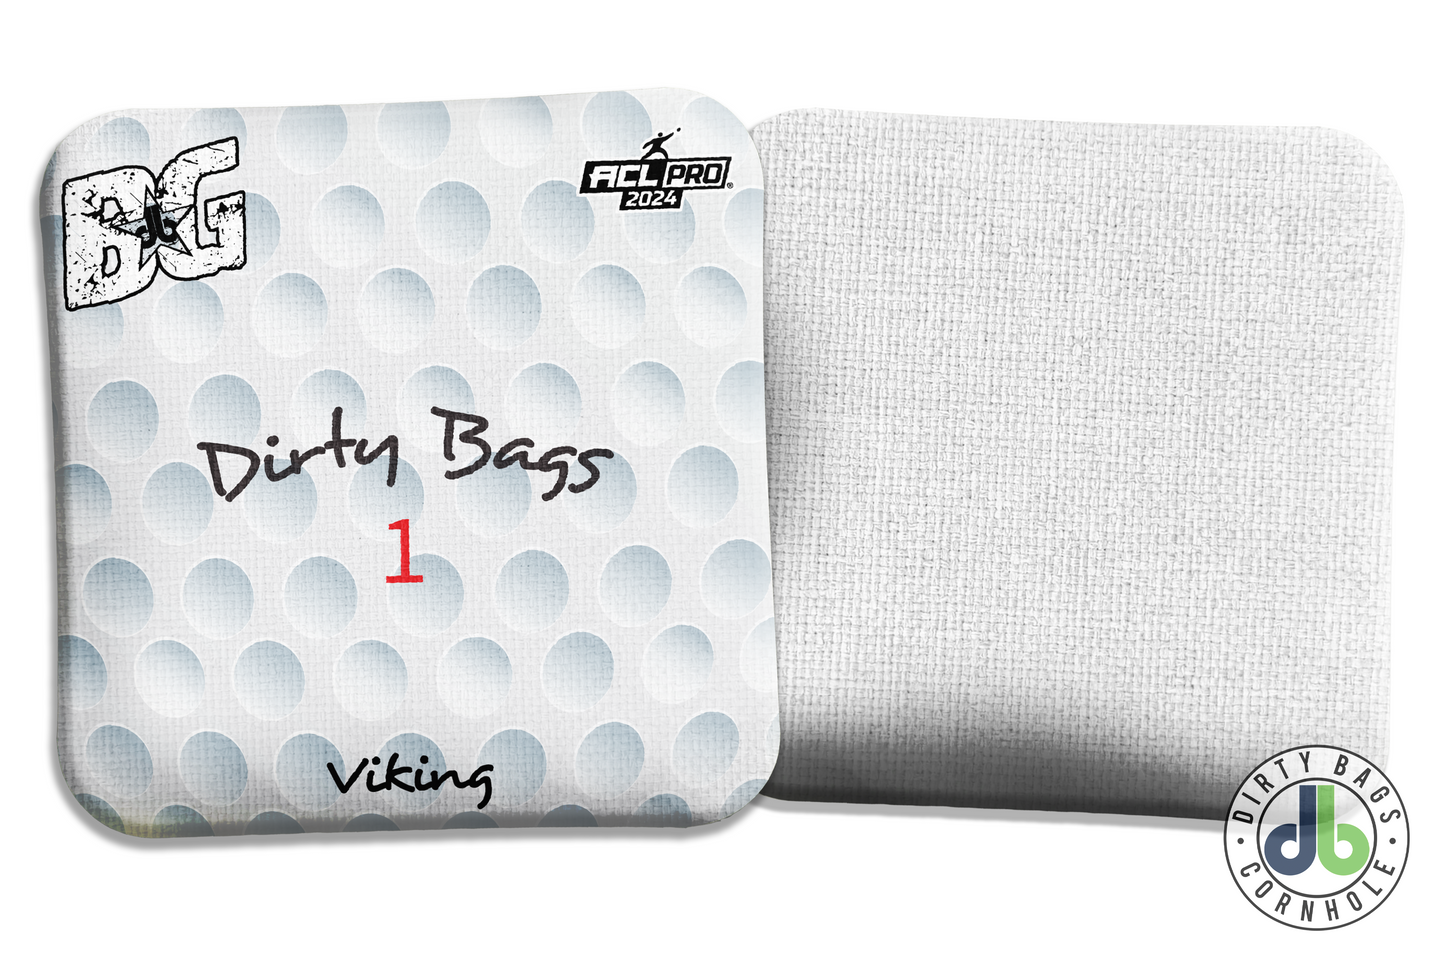 BG Cornhole Golf Ball Bags - Multiple Series